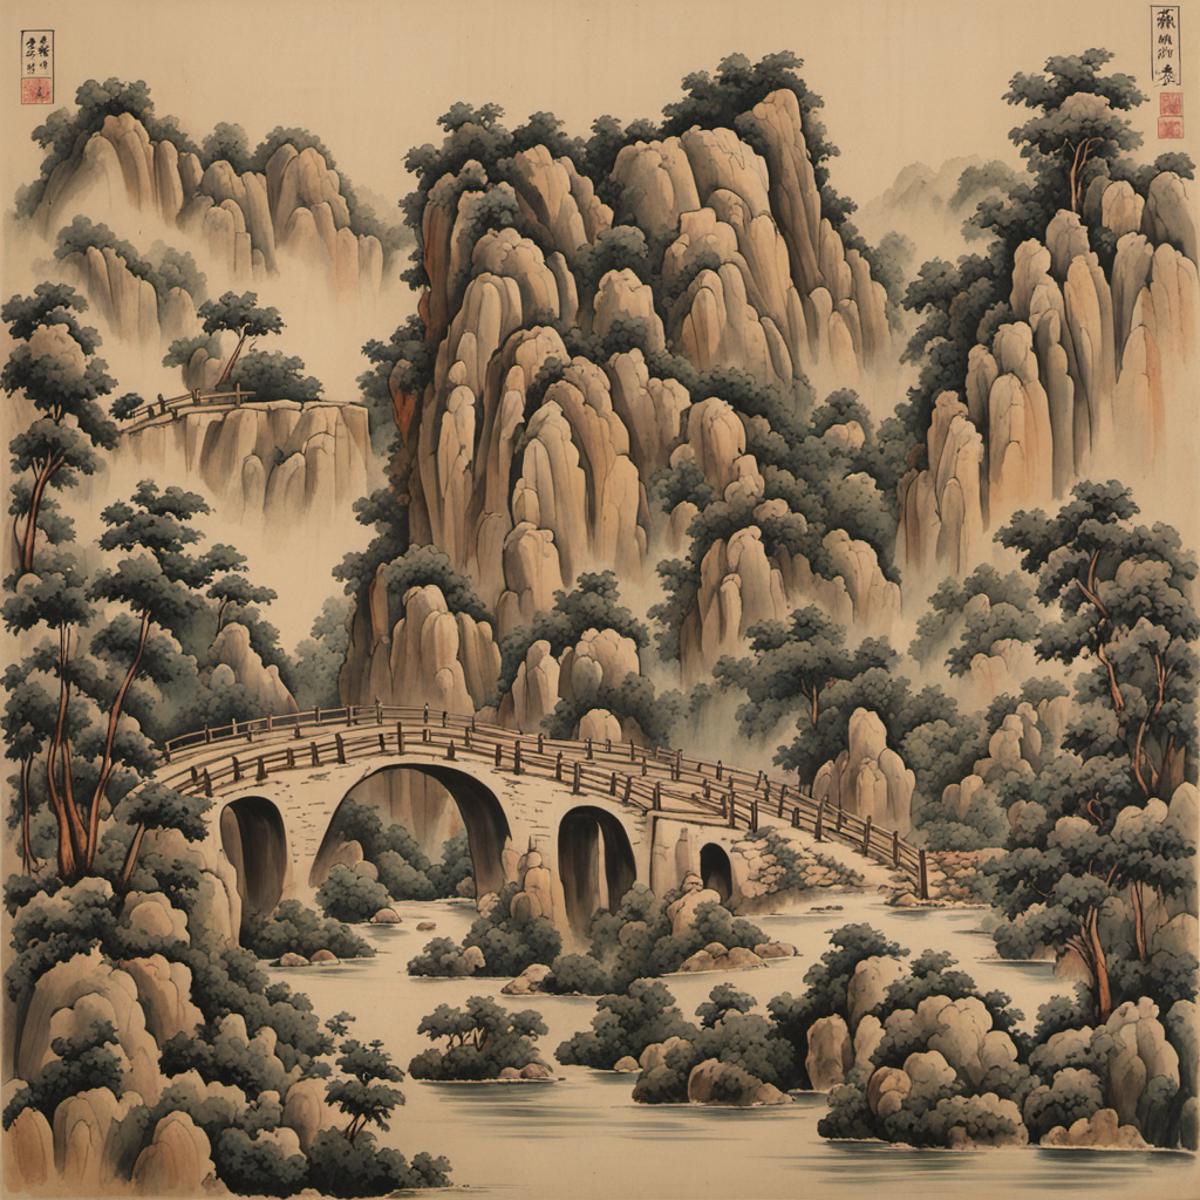 Tang Bohu's Painting Style LORA SDXL 唐伯虎画风劳拉XL image by TangBohu